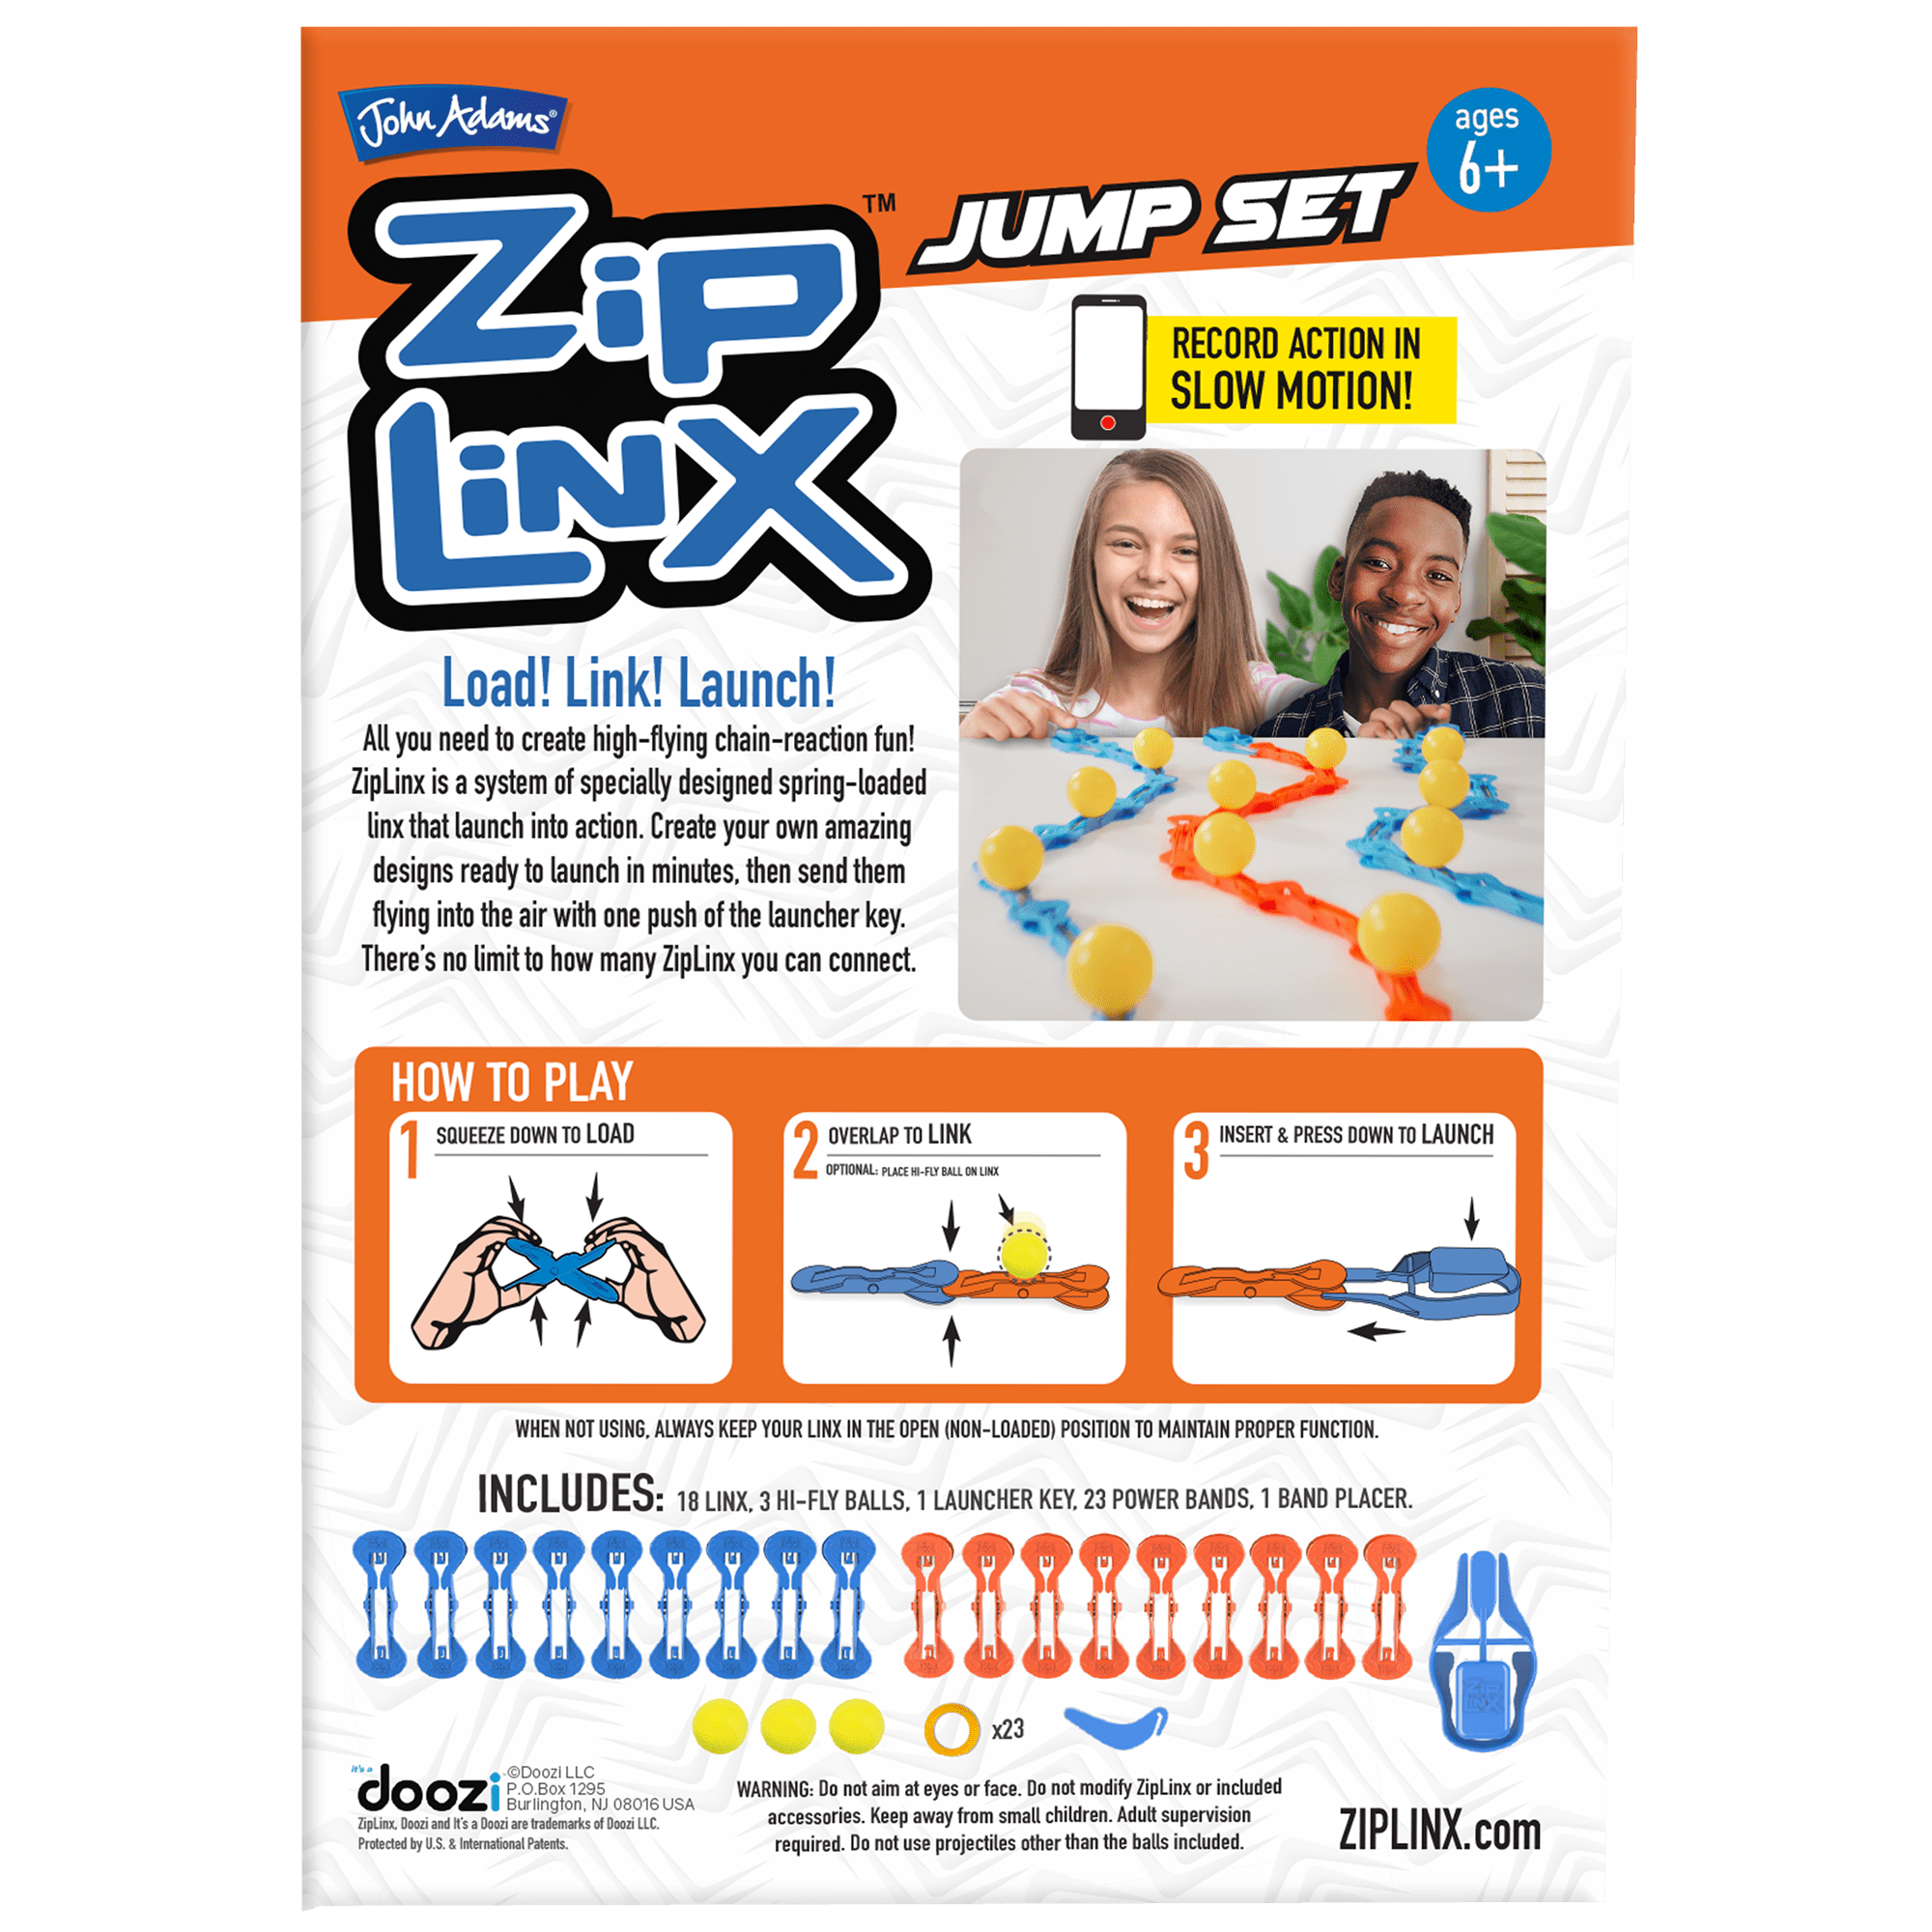 ZipLinx Jump Set - John Adams